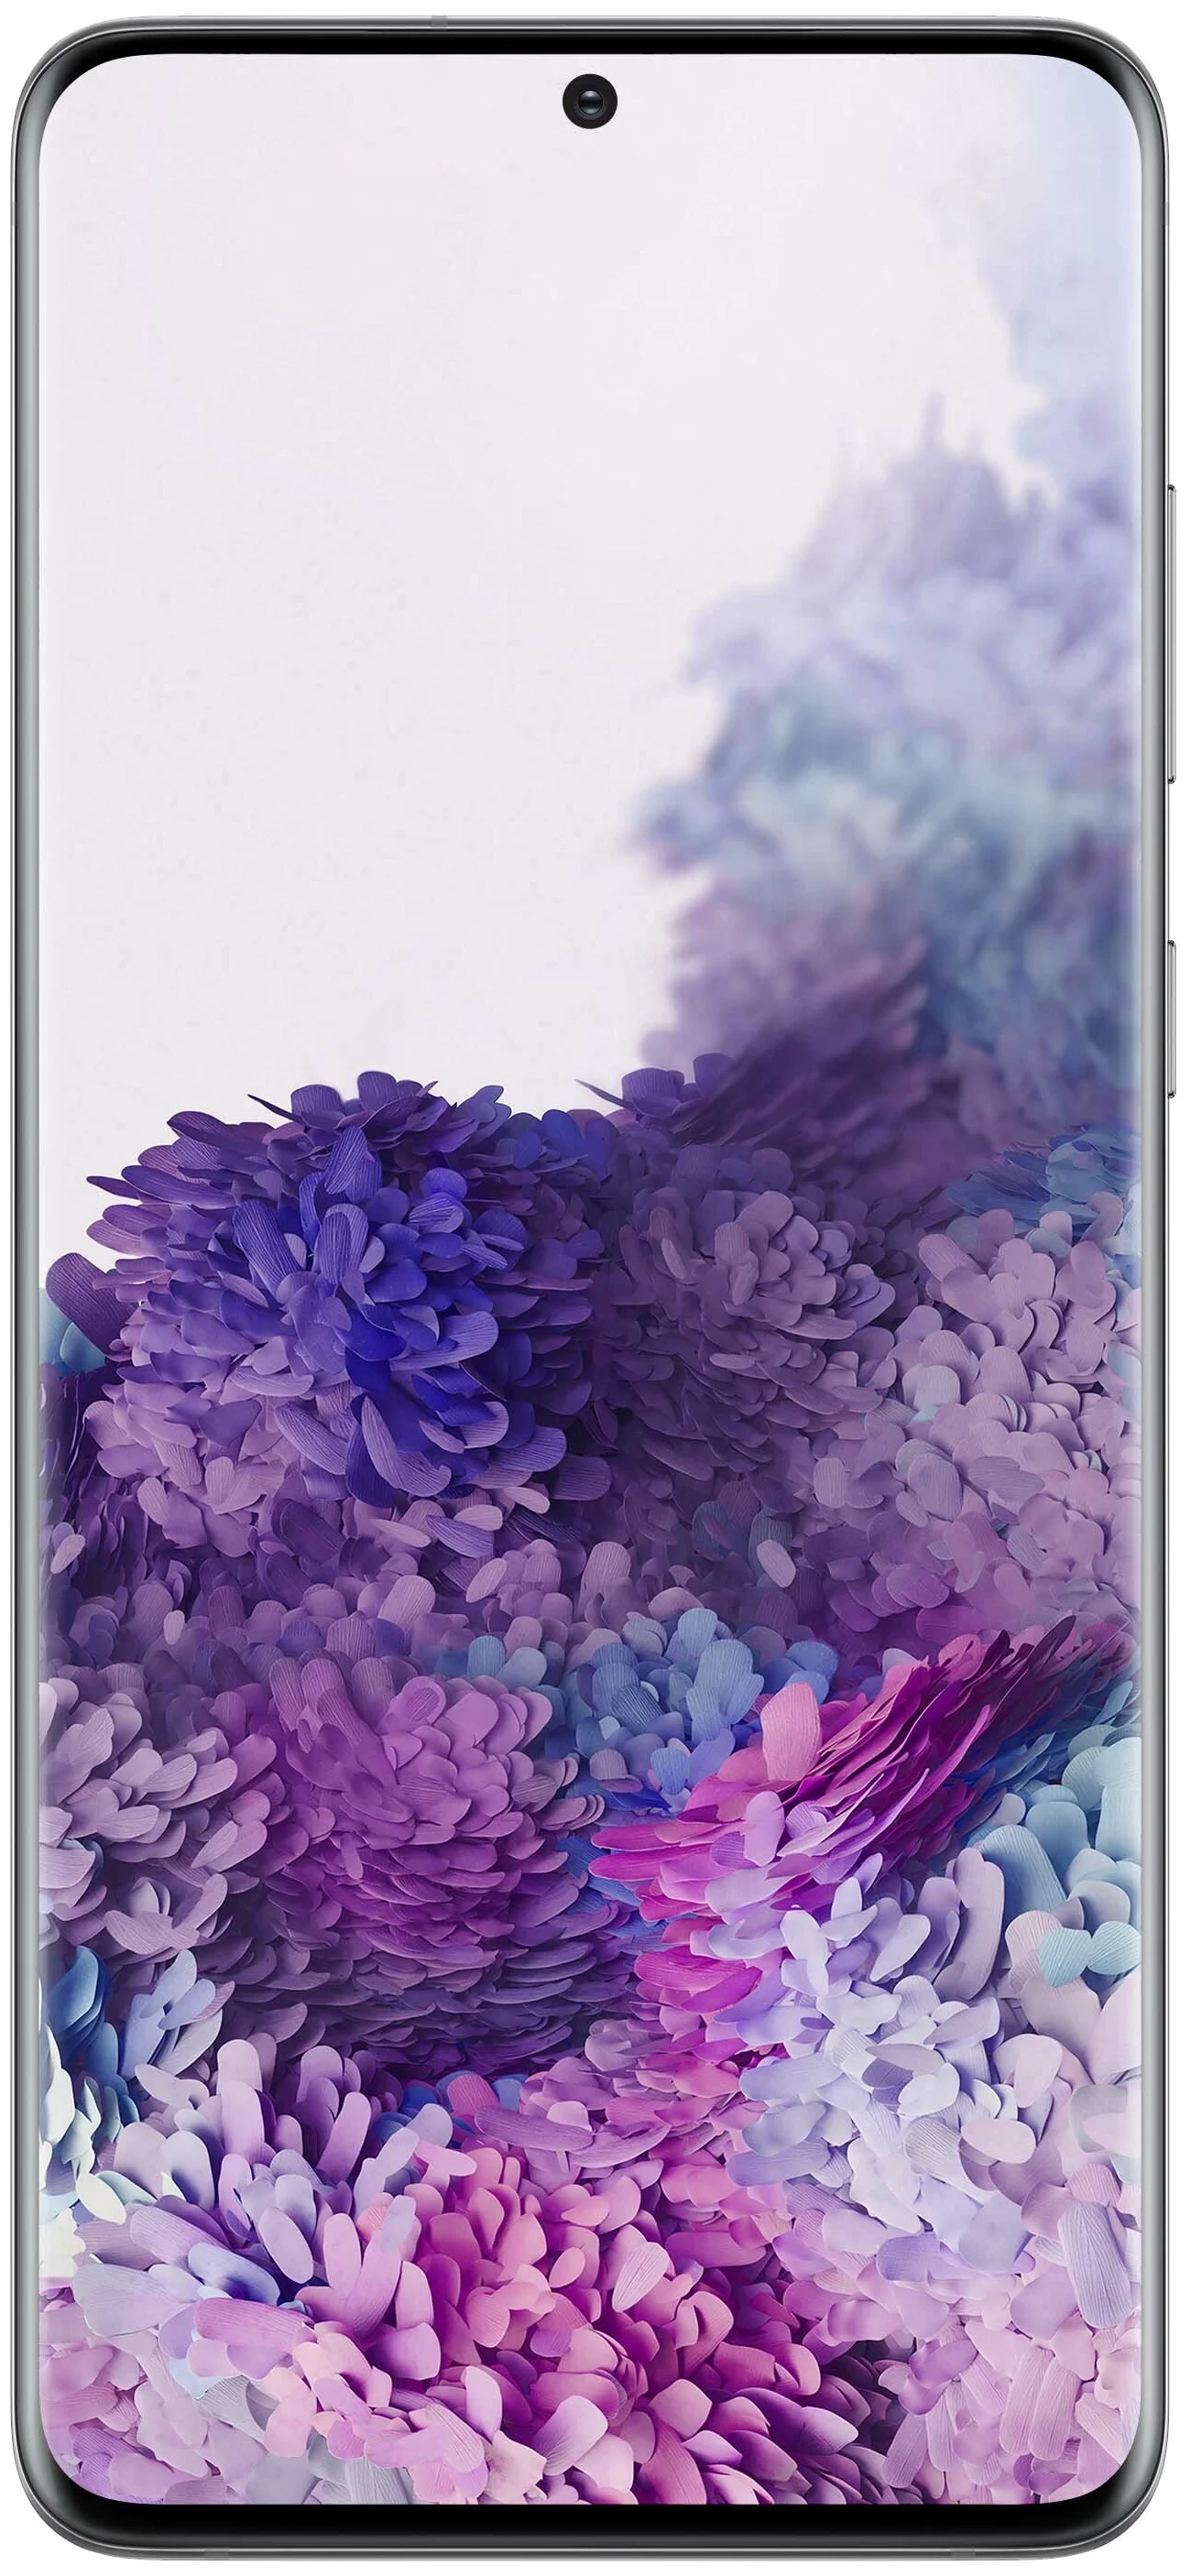 Samsung Galaxy S20+ - беспроводные интерфейсы: NFC, Wi-Fi, Bluetooth 5.0